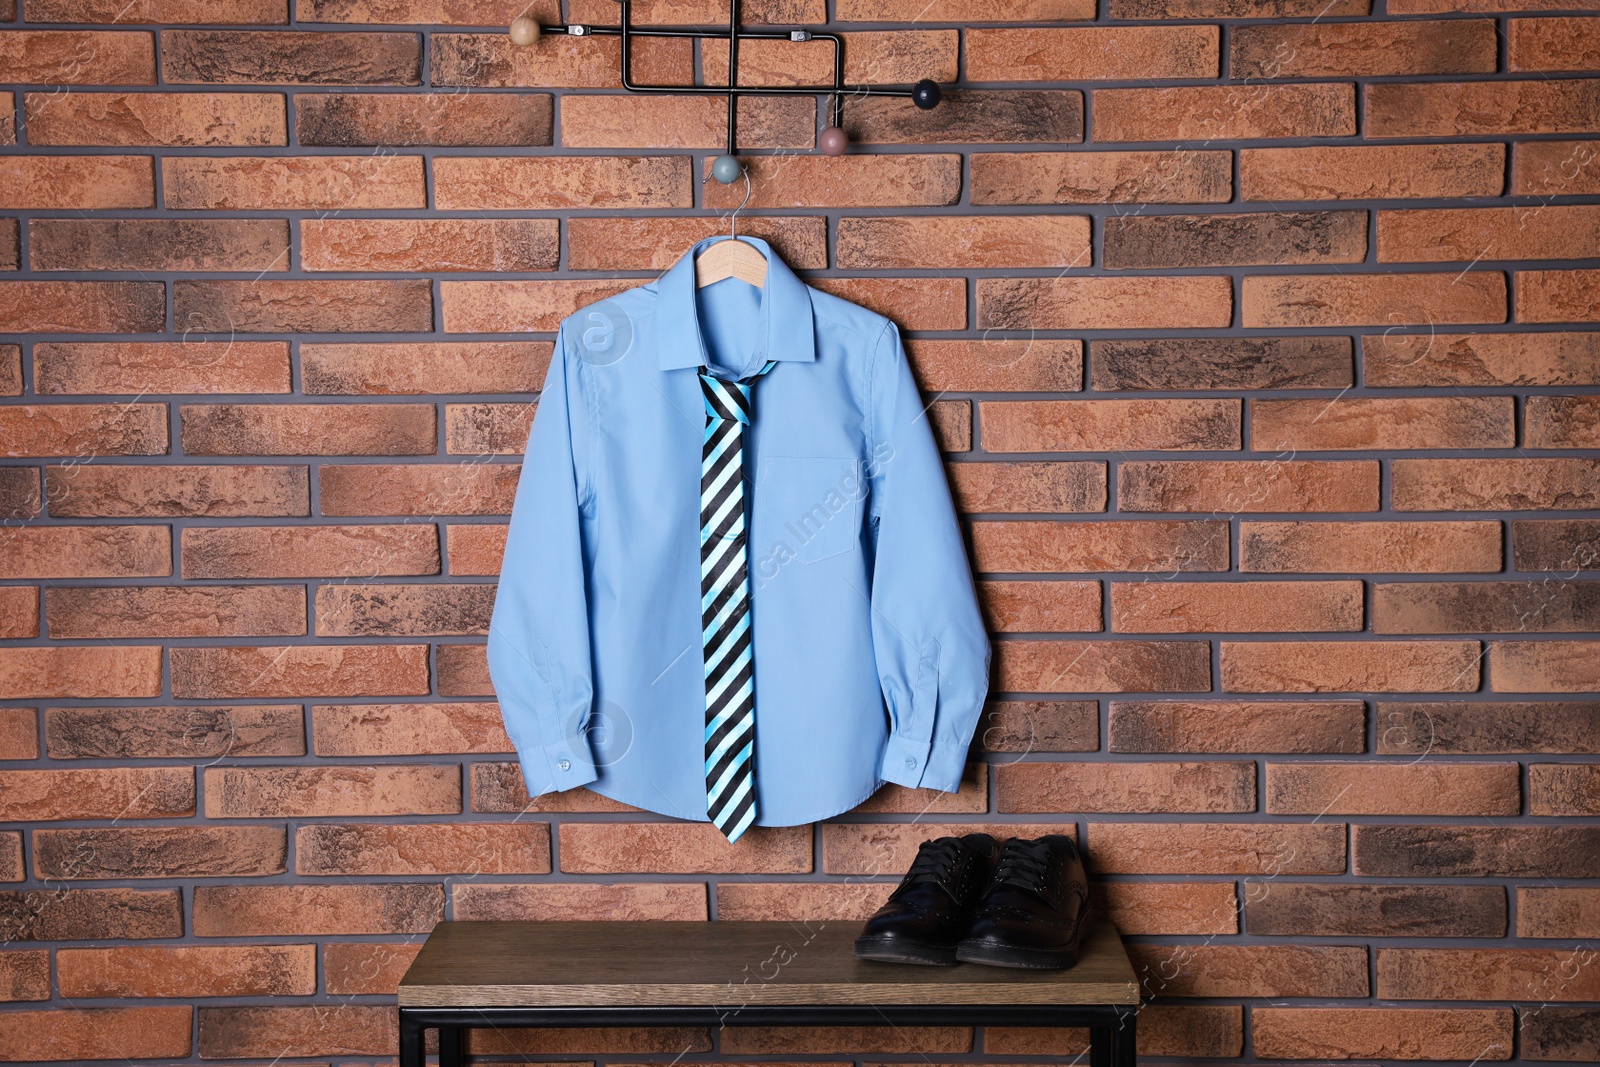 Photo of Shirt with tie hanging on brick wall. School uniform